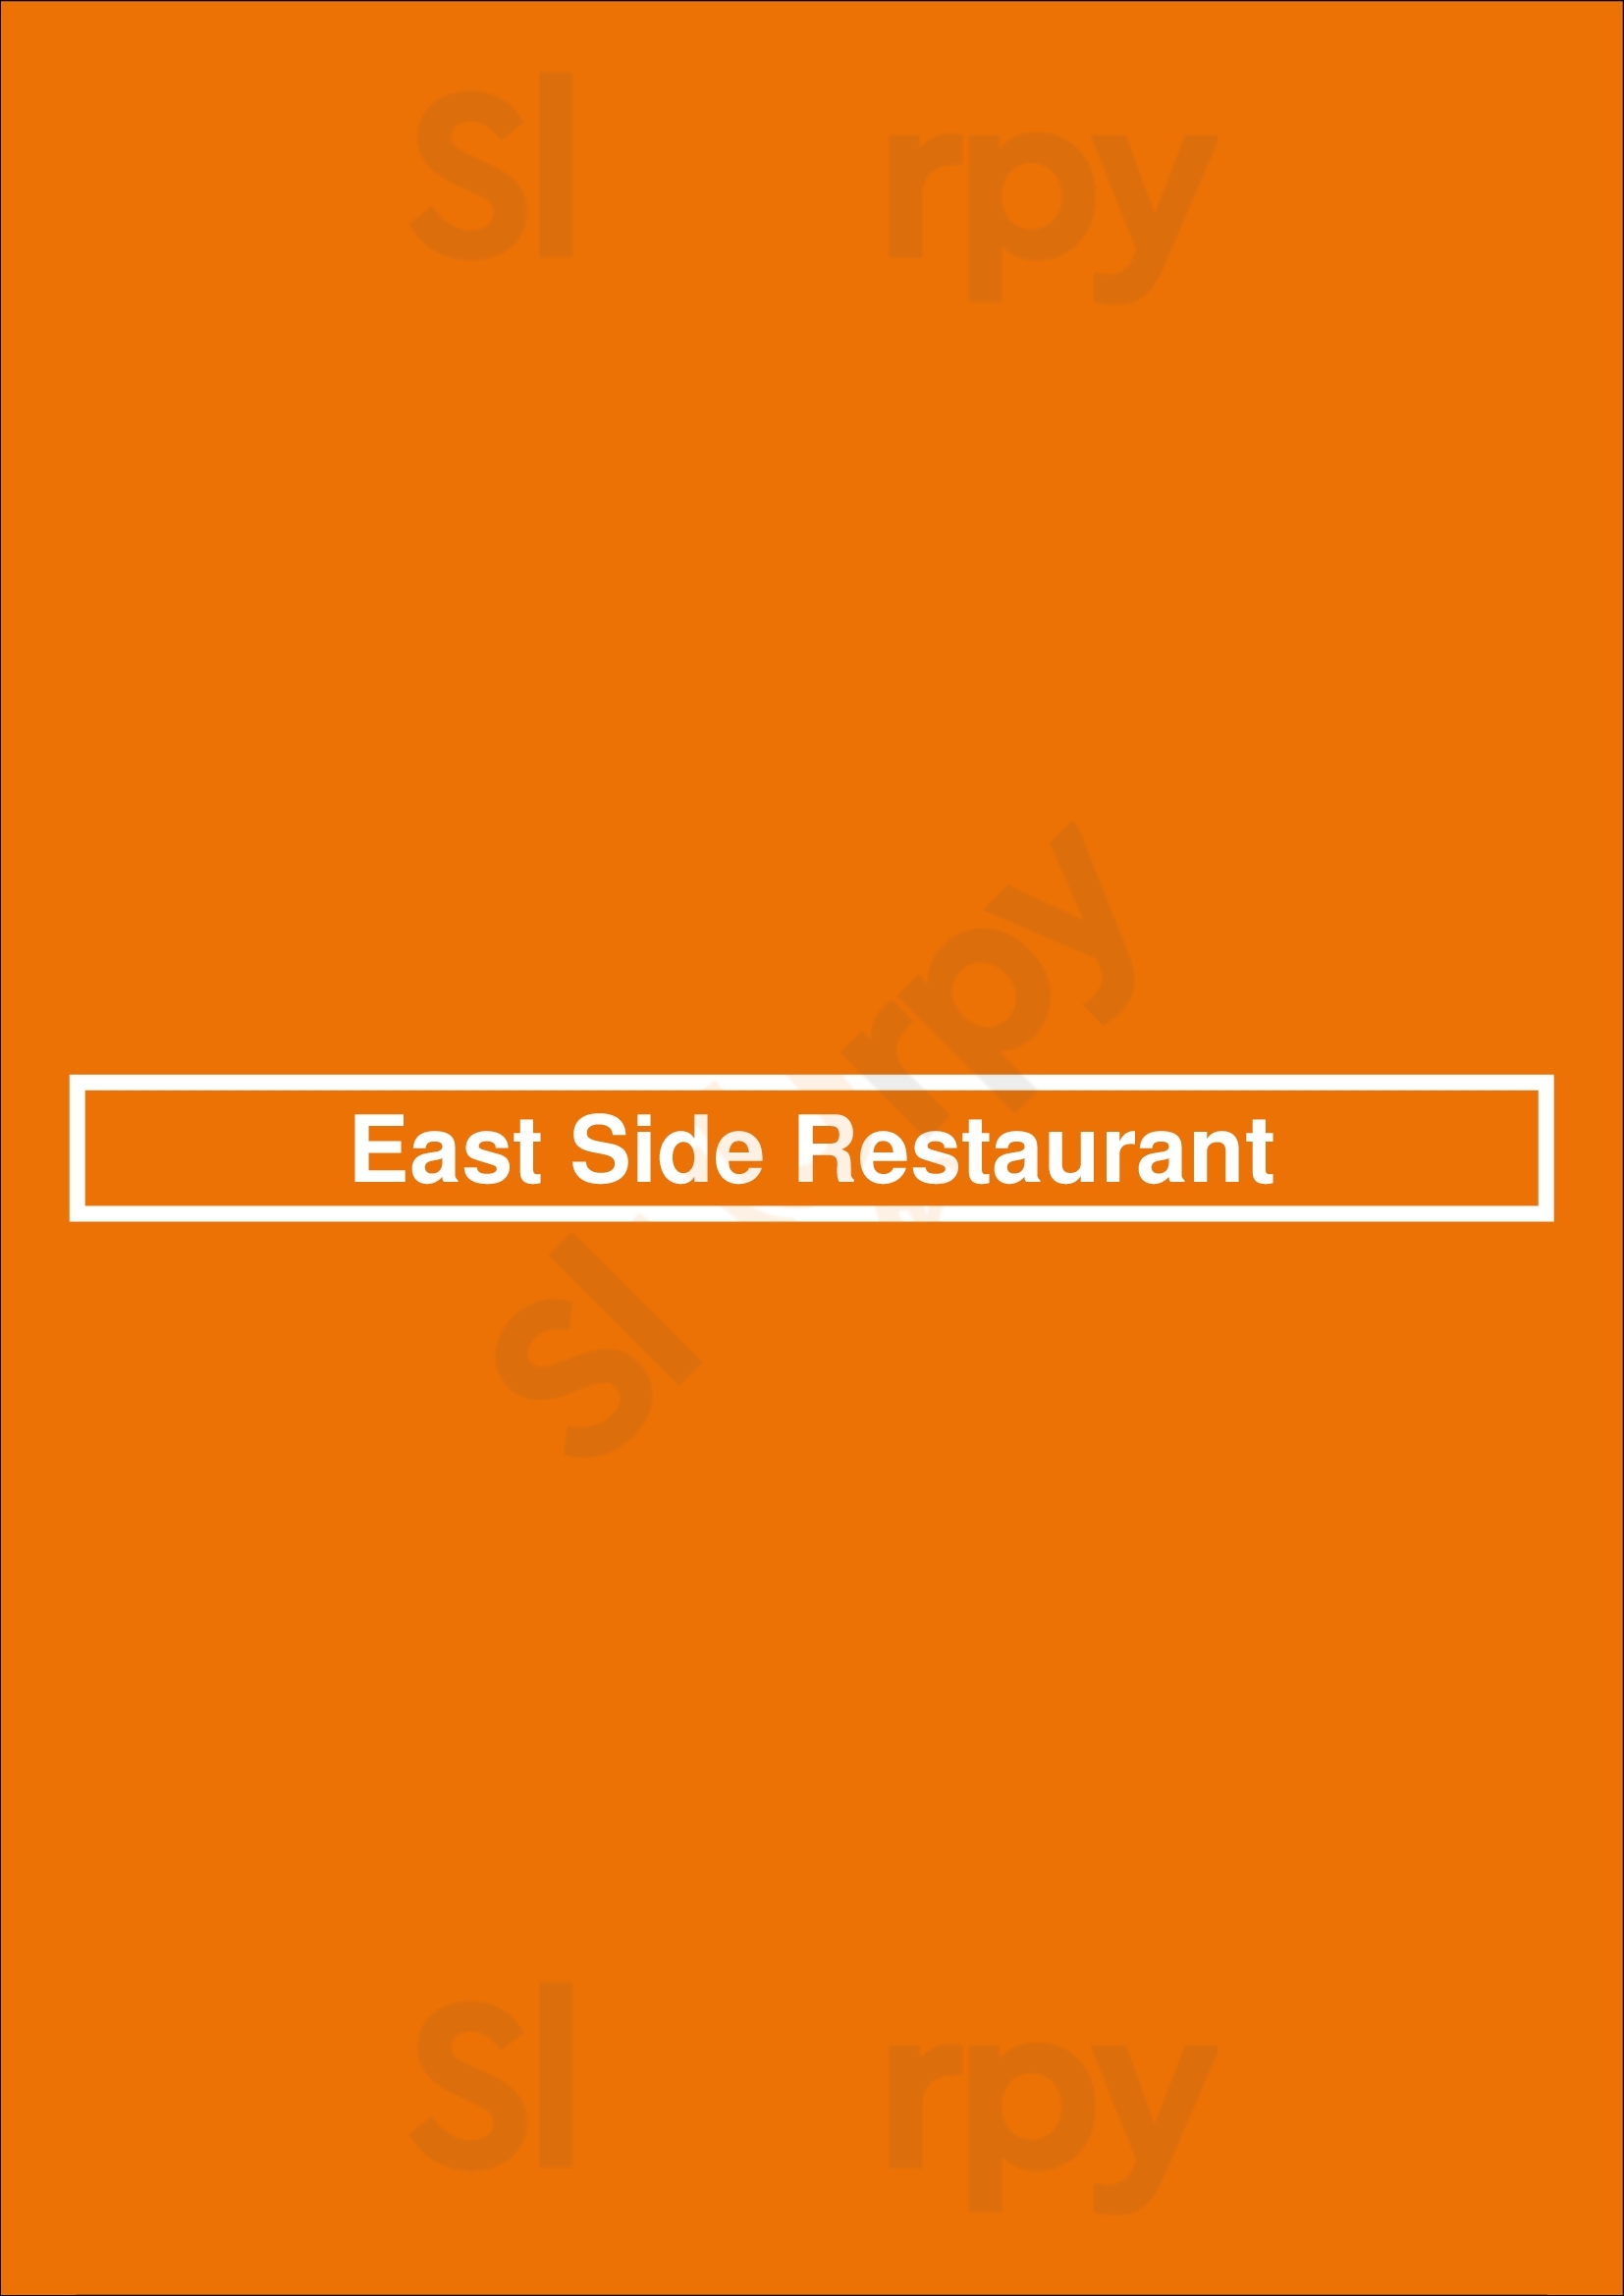 East Side Restaurant Offenbach Menu - 1